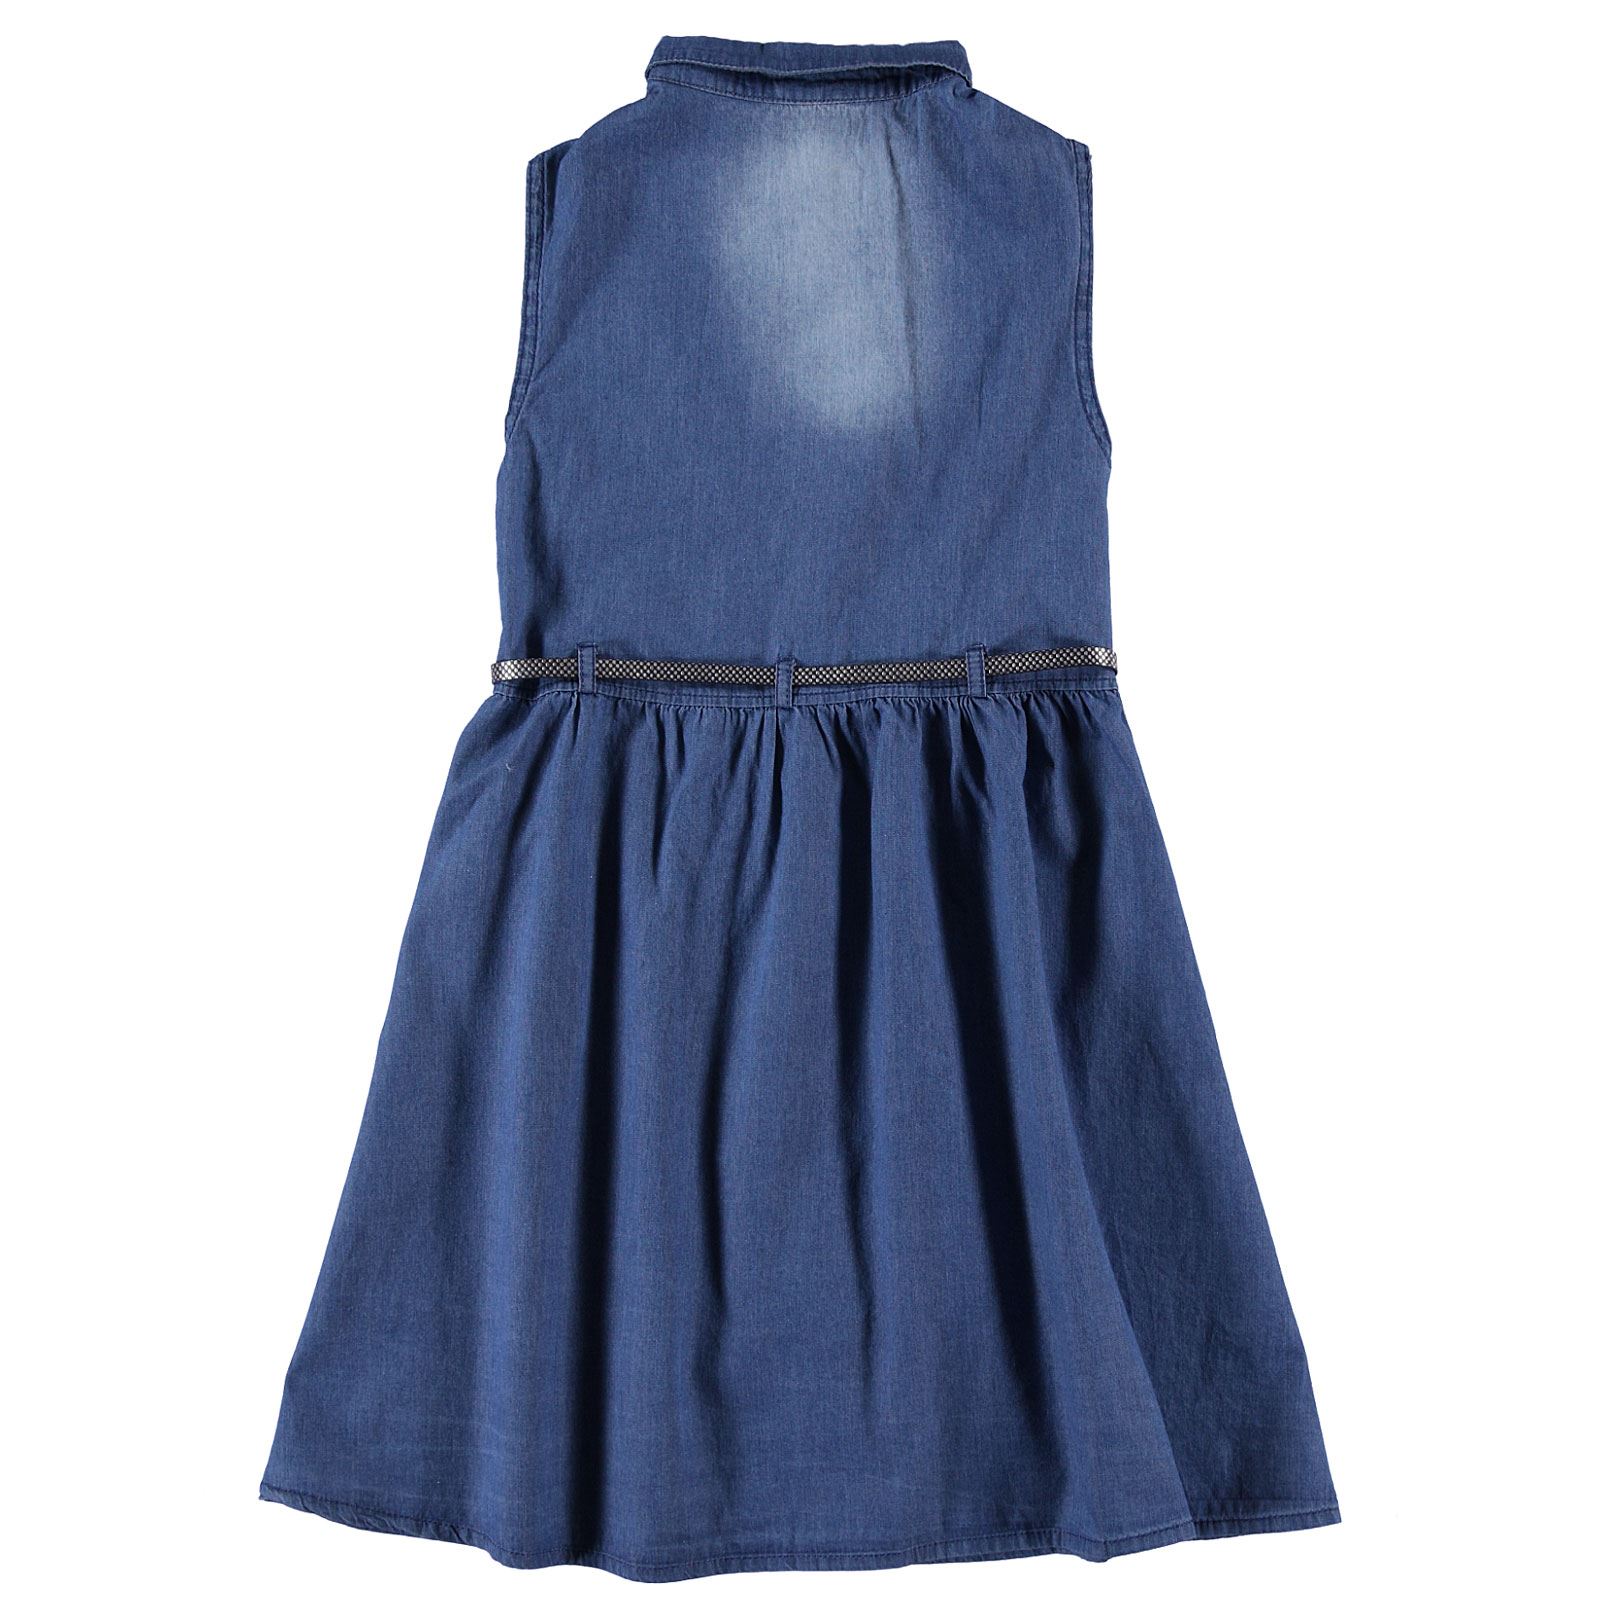 Civil Girls Kız Çocuk Kot Elbise 10-13 Yaş Mavi